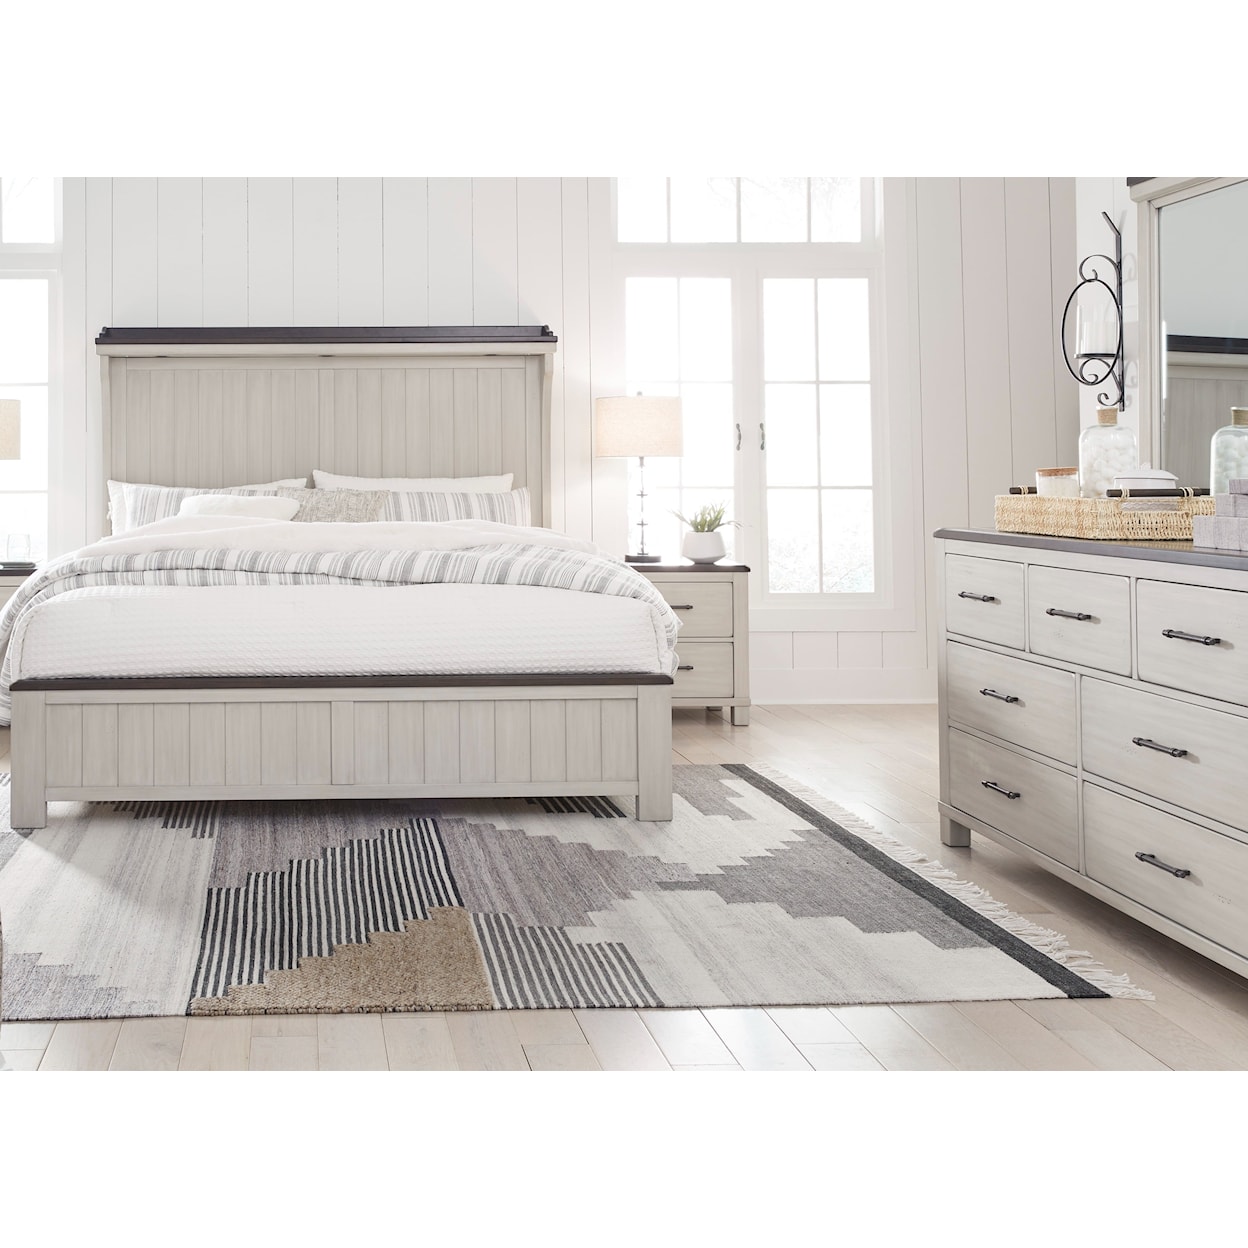 Ashley Furniture Signature Design Darborn California King Bedroom Set